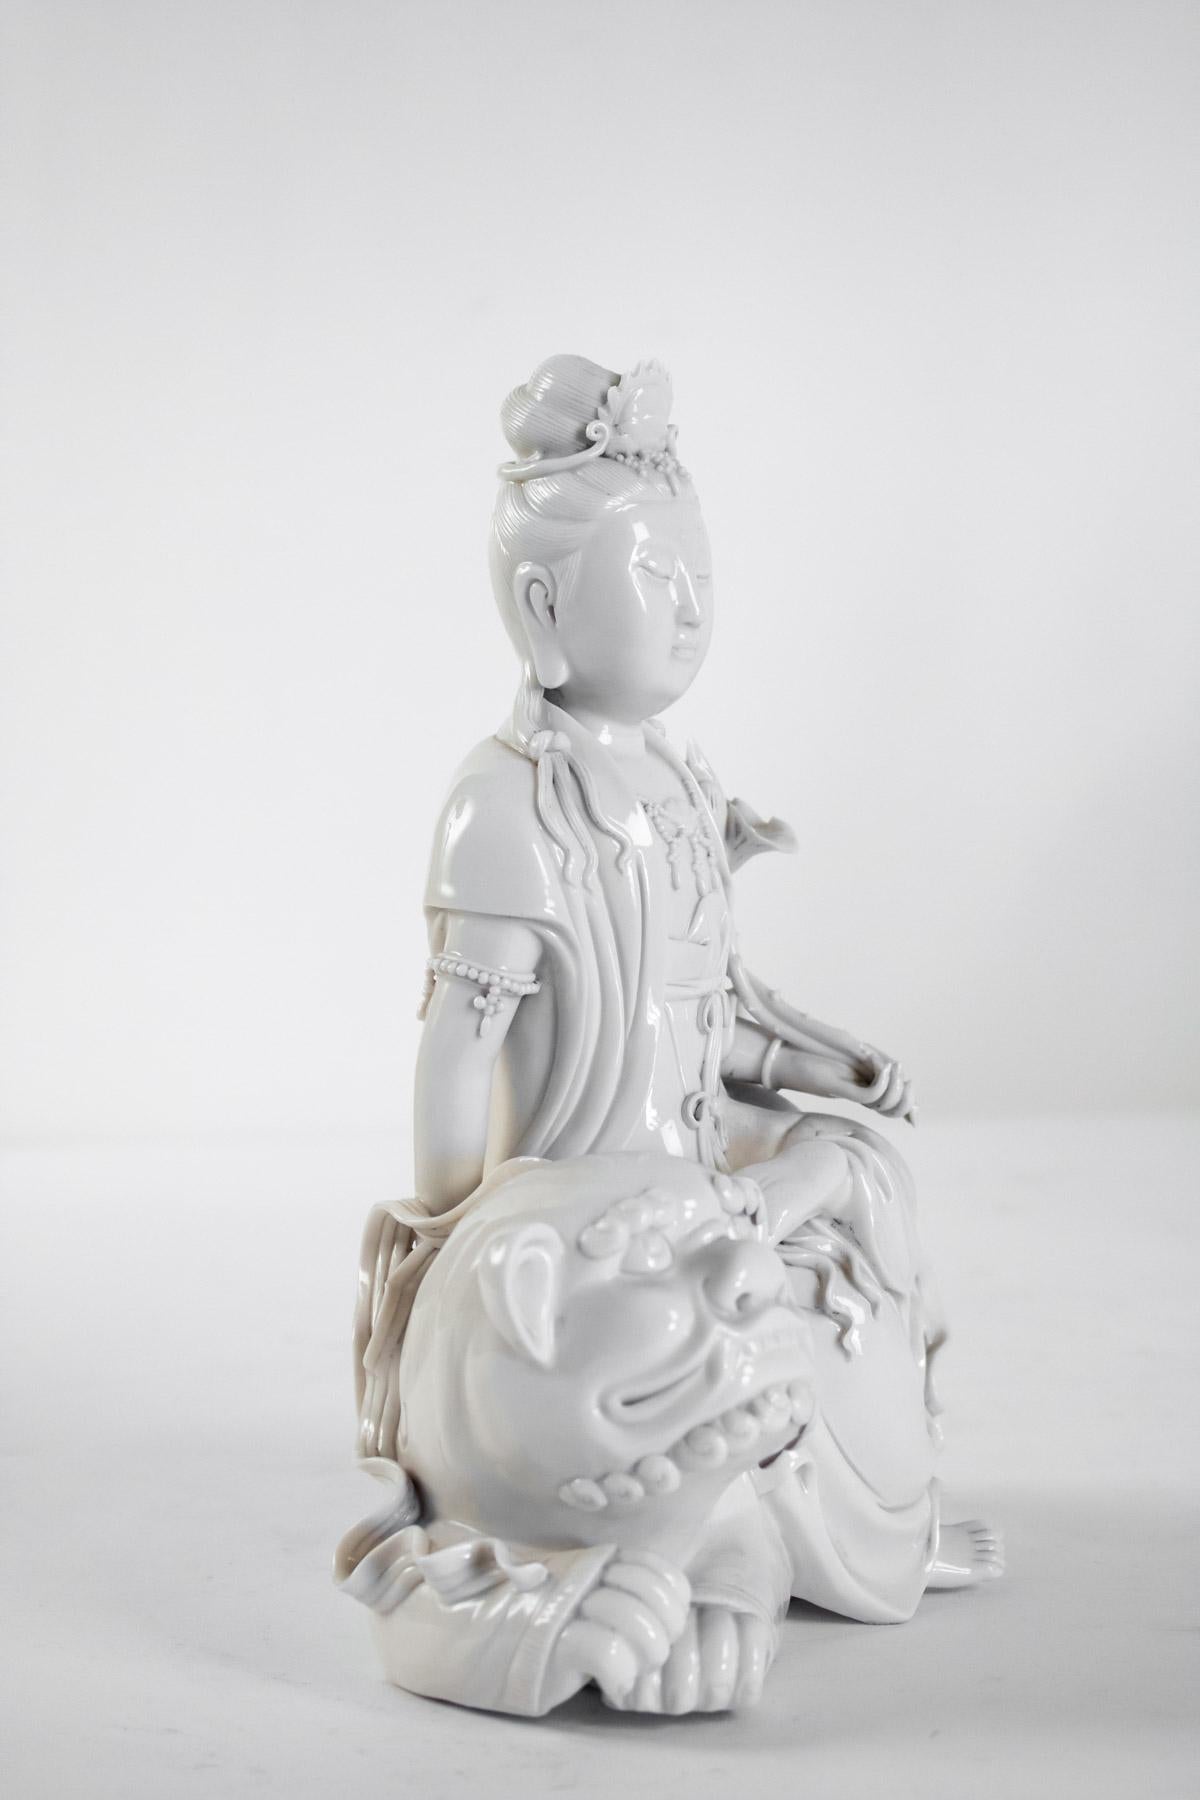 20th Century Dehua Porcelain Buddhist Deity, Chinese White, Asia, Quanine